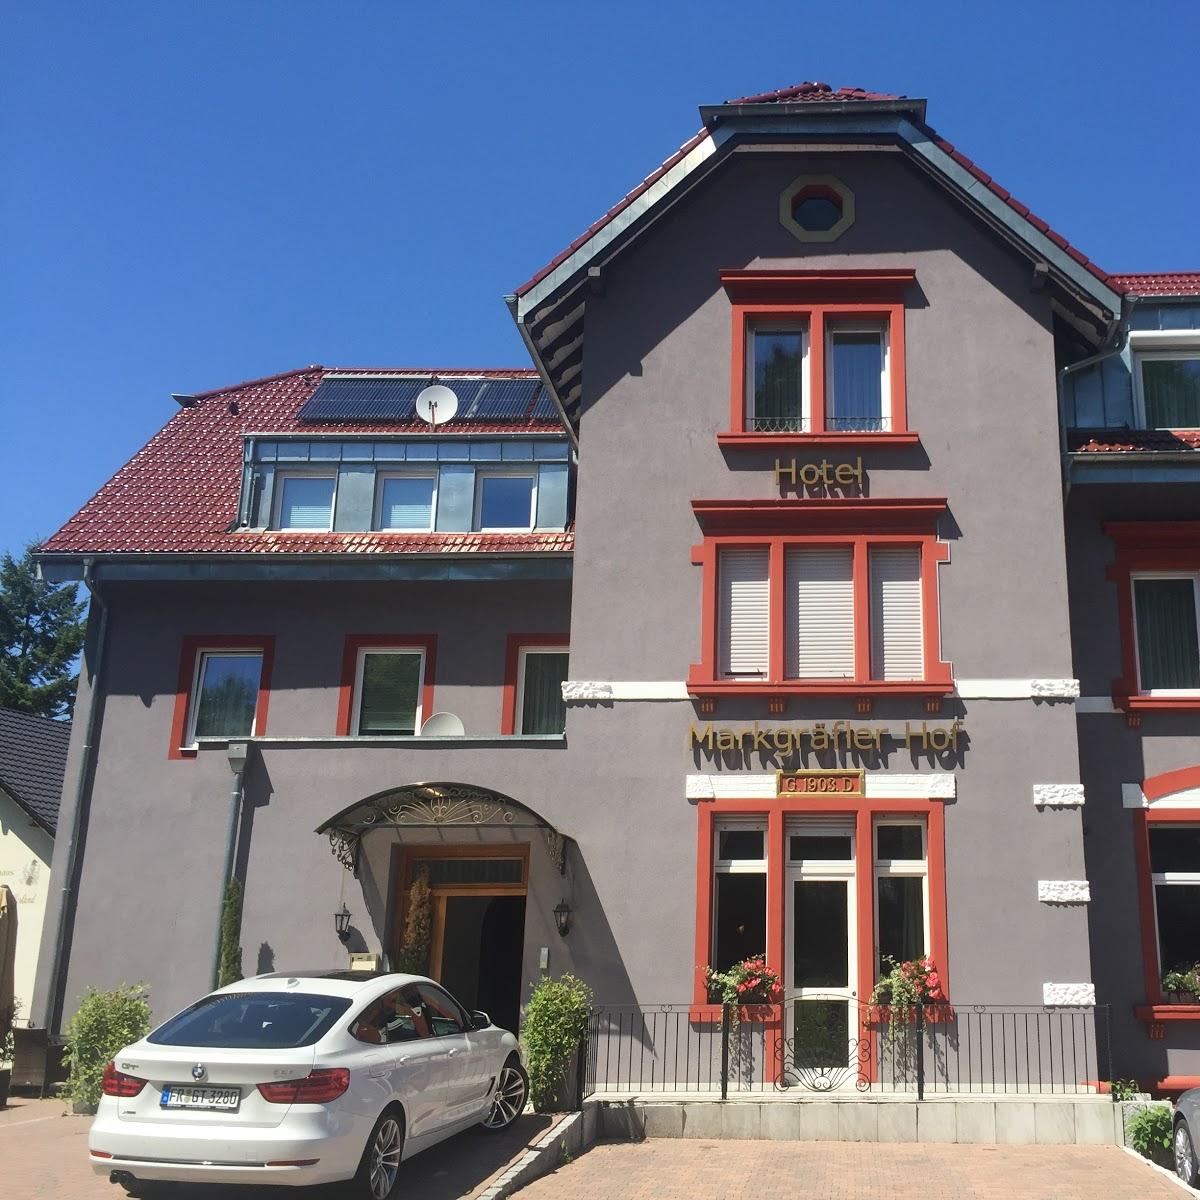 Restaurant "Hotel Markgräfler Hof" in  Badenweiler